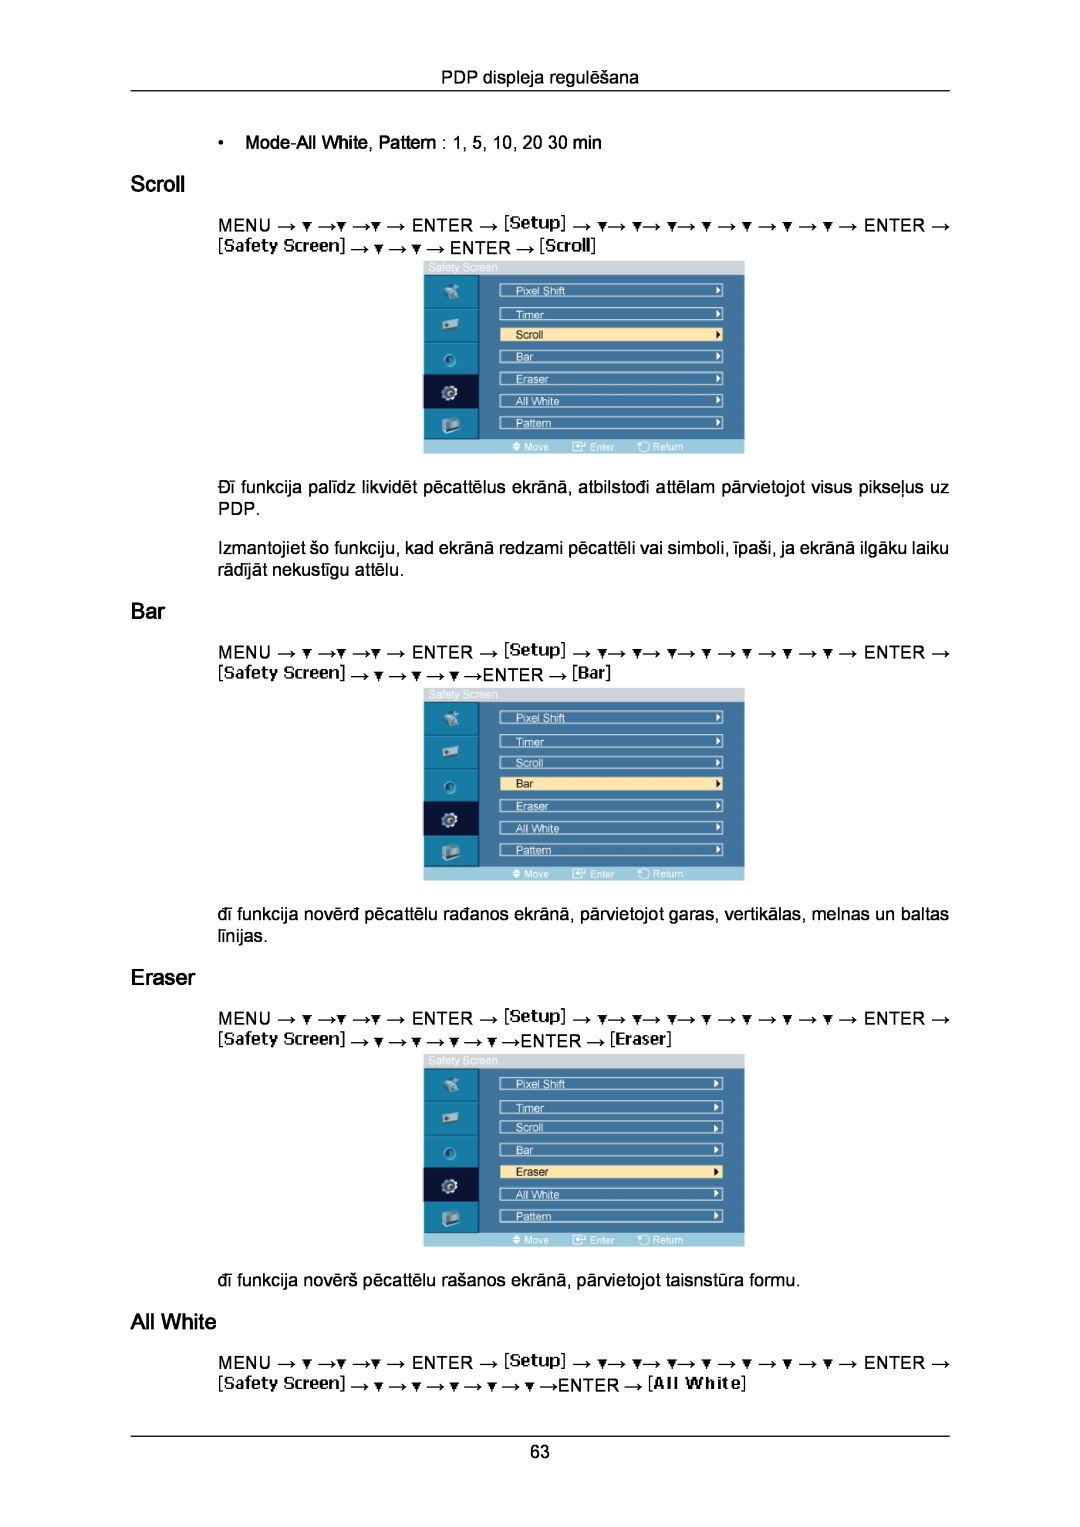 Samsung PH50KPPLBF/EN, PH63KPFLBF/EN manual Scroll, Eraser, Mode‐All White, Pattern 1, 5, 10, 20 30 min 